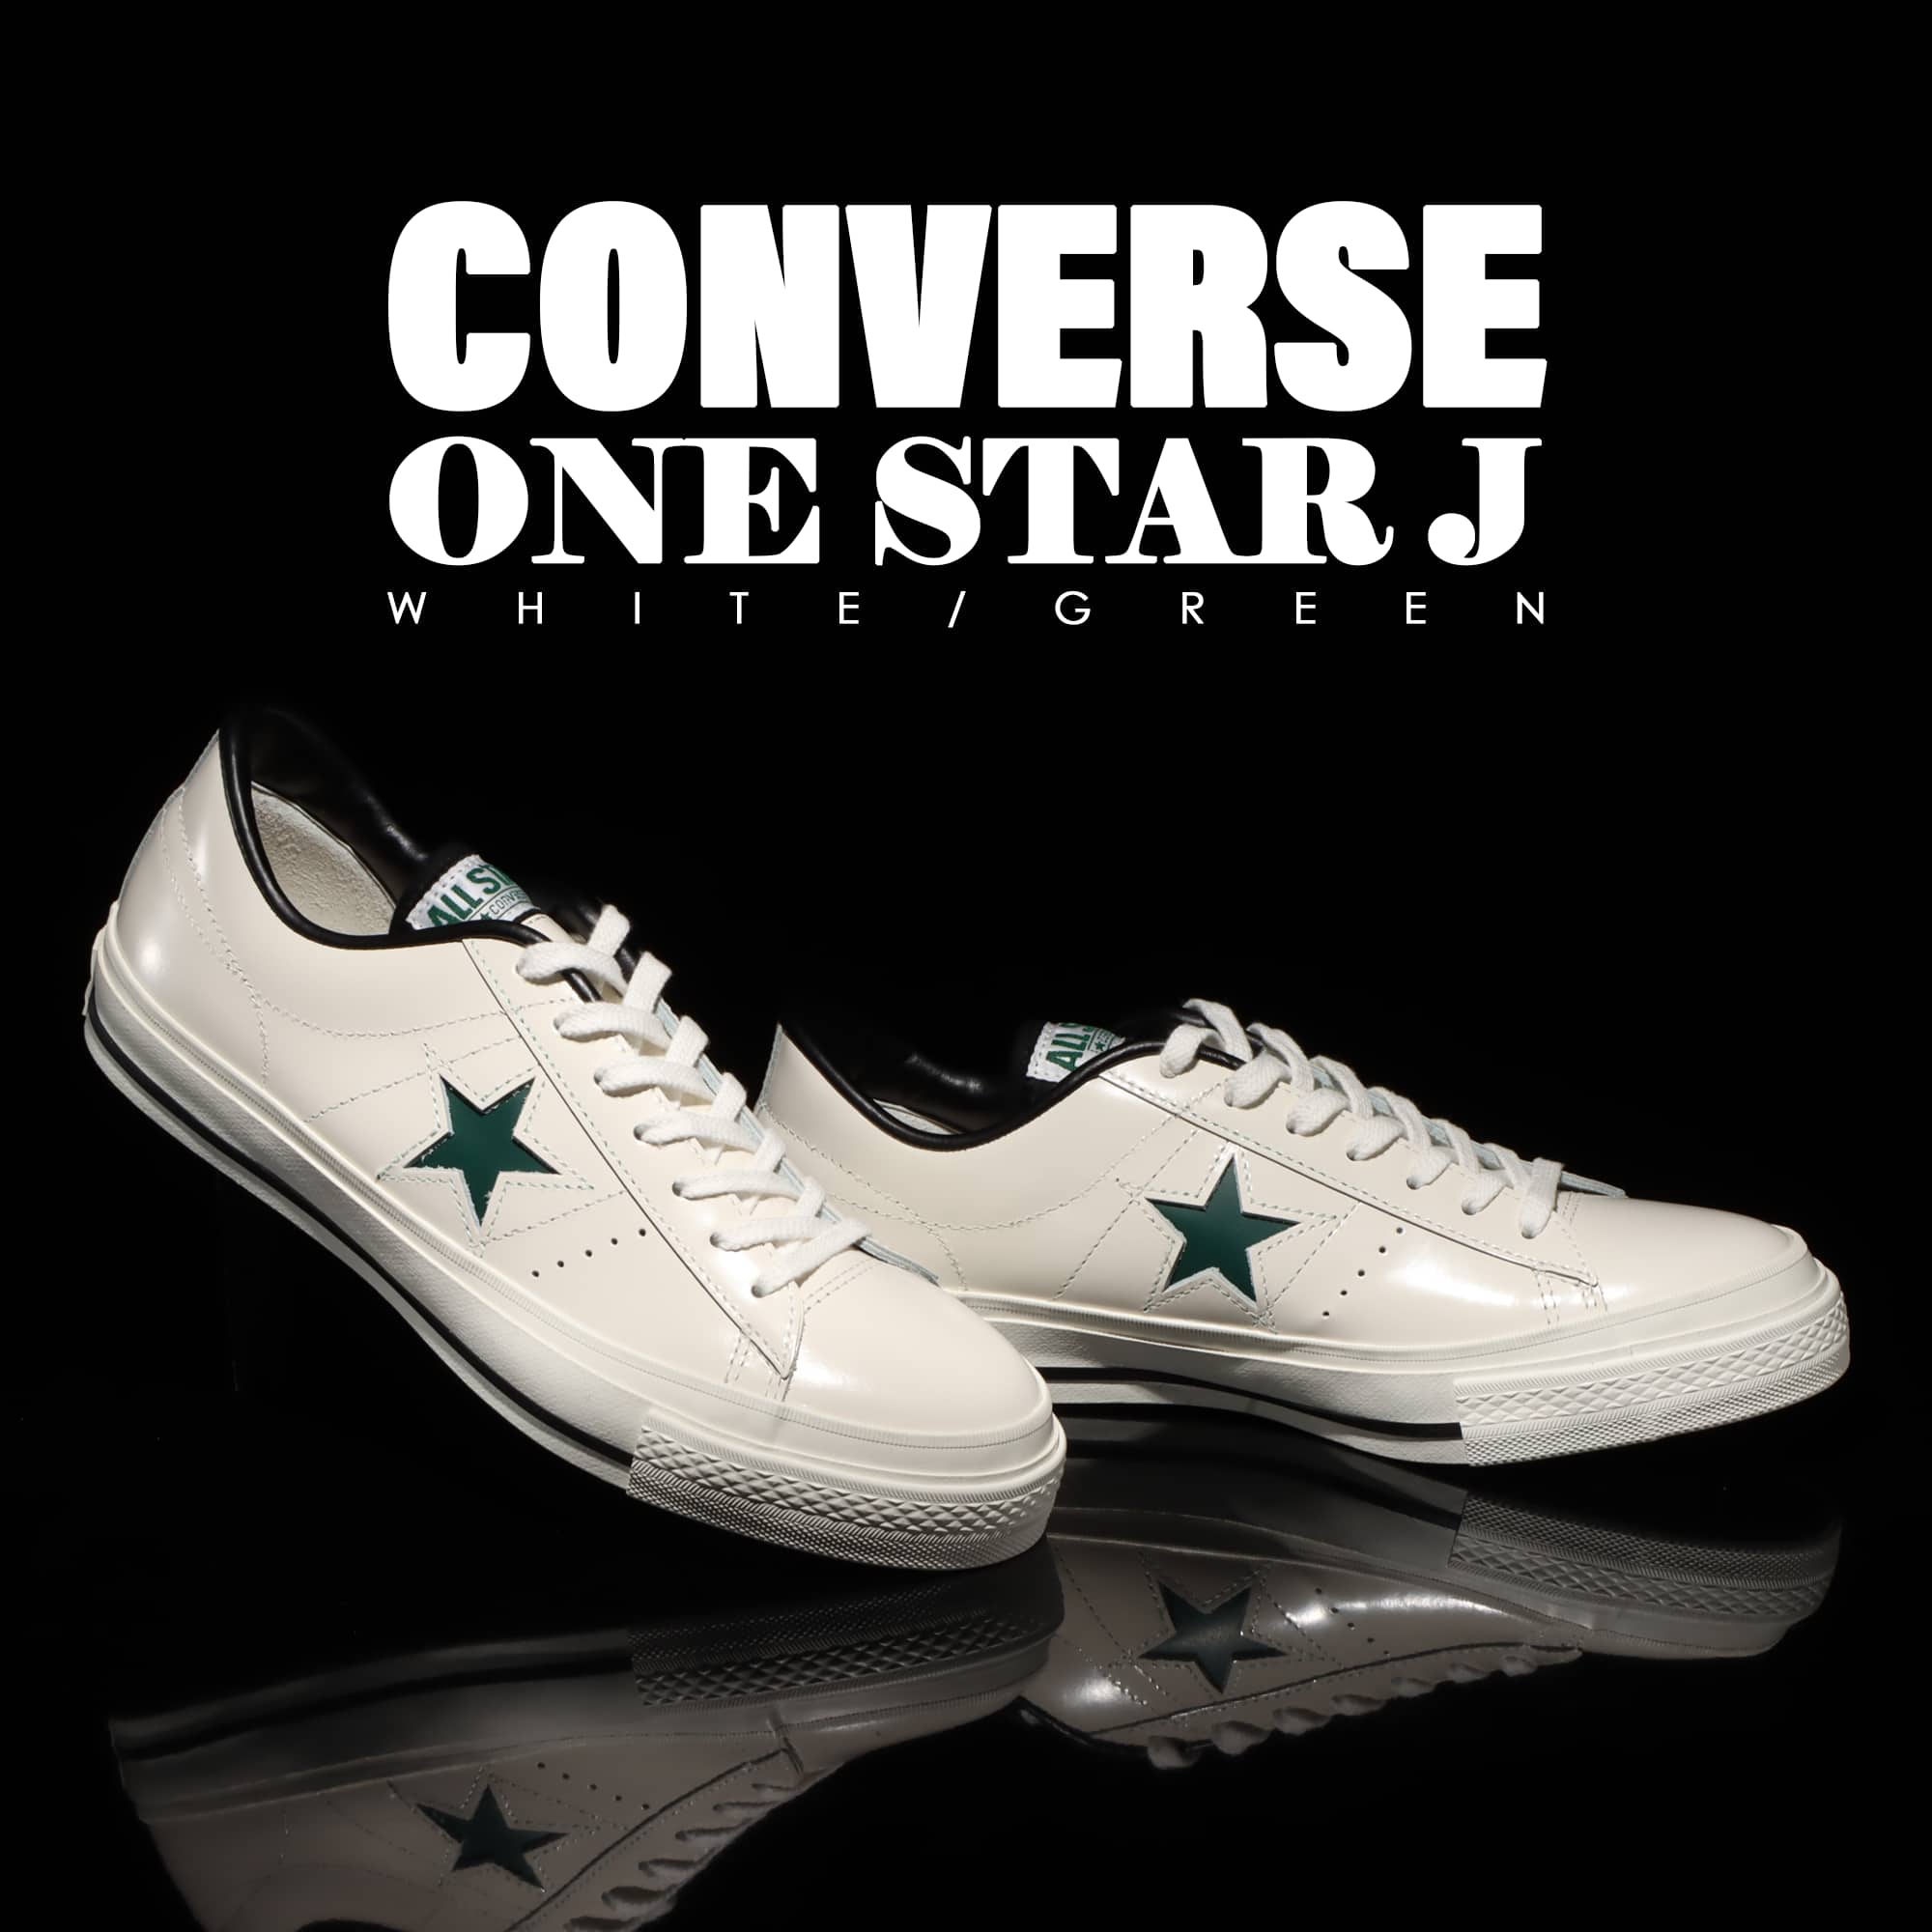 CONVERSE ONE STAR J WHITE/GREEN